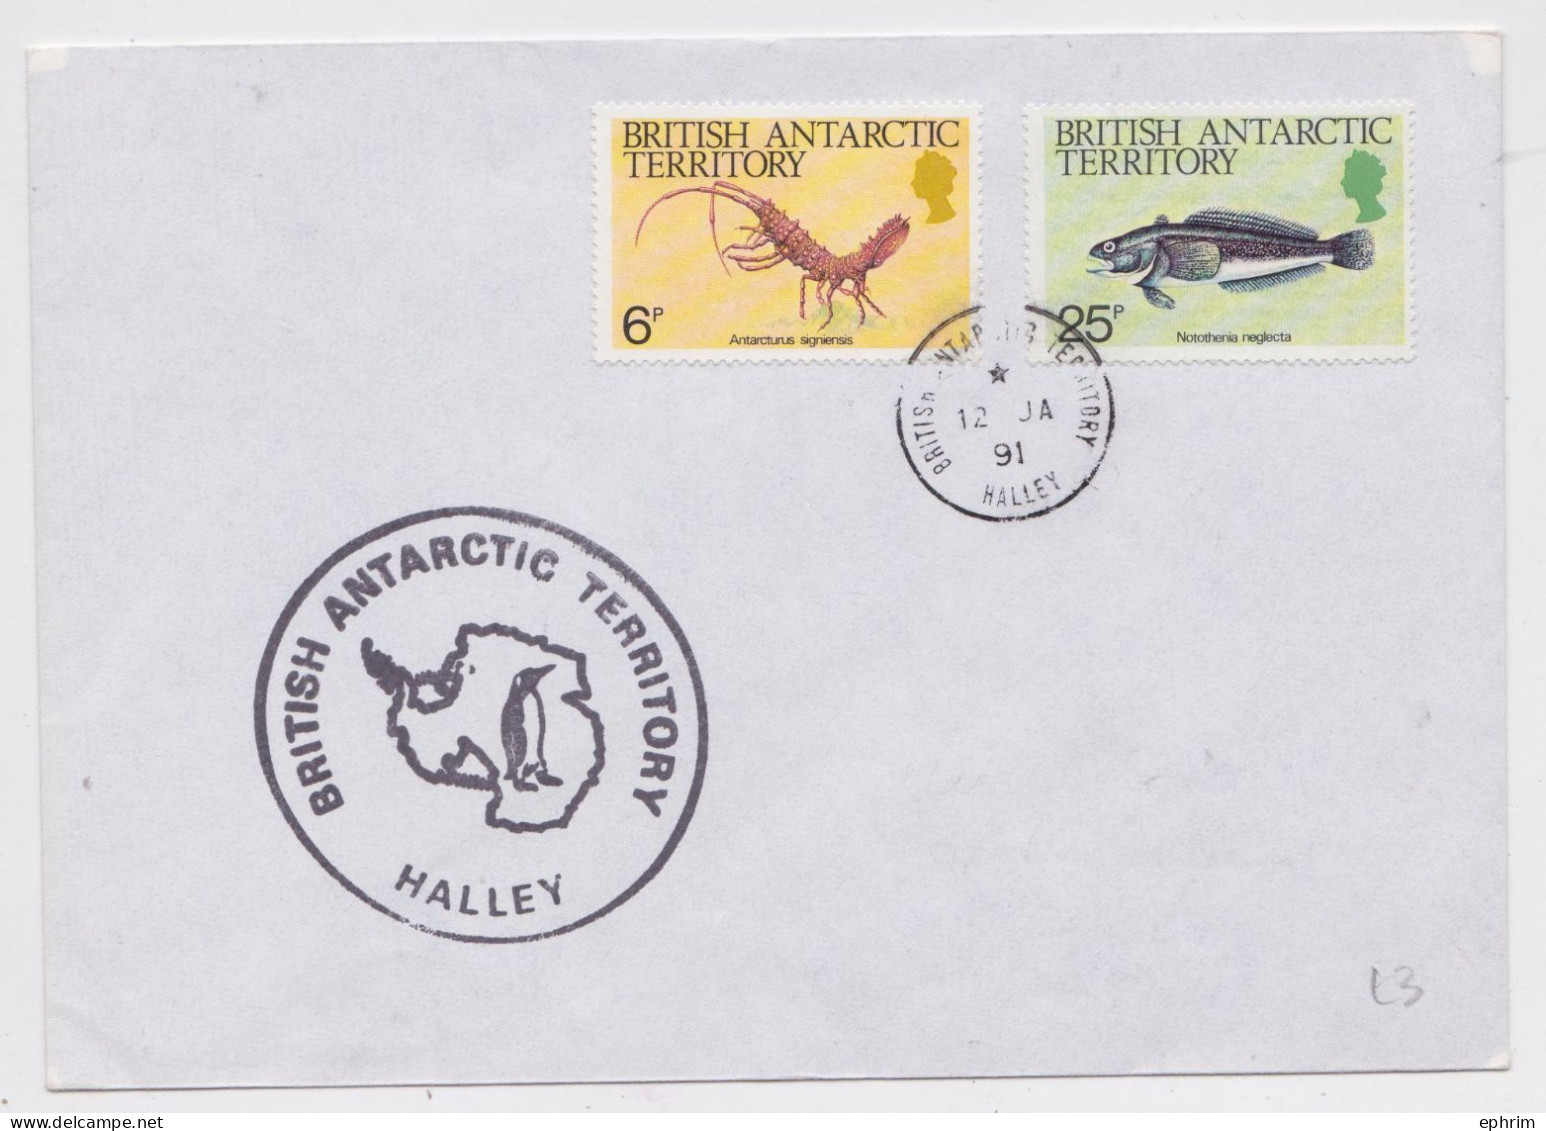 Antarctique BAT Britsh Antarctic Territory Base Halley Marine Life Stamp Cover 1991 Enveloppe Timbre Poisson Crustacé - Lettres & Documents